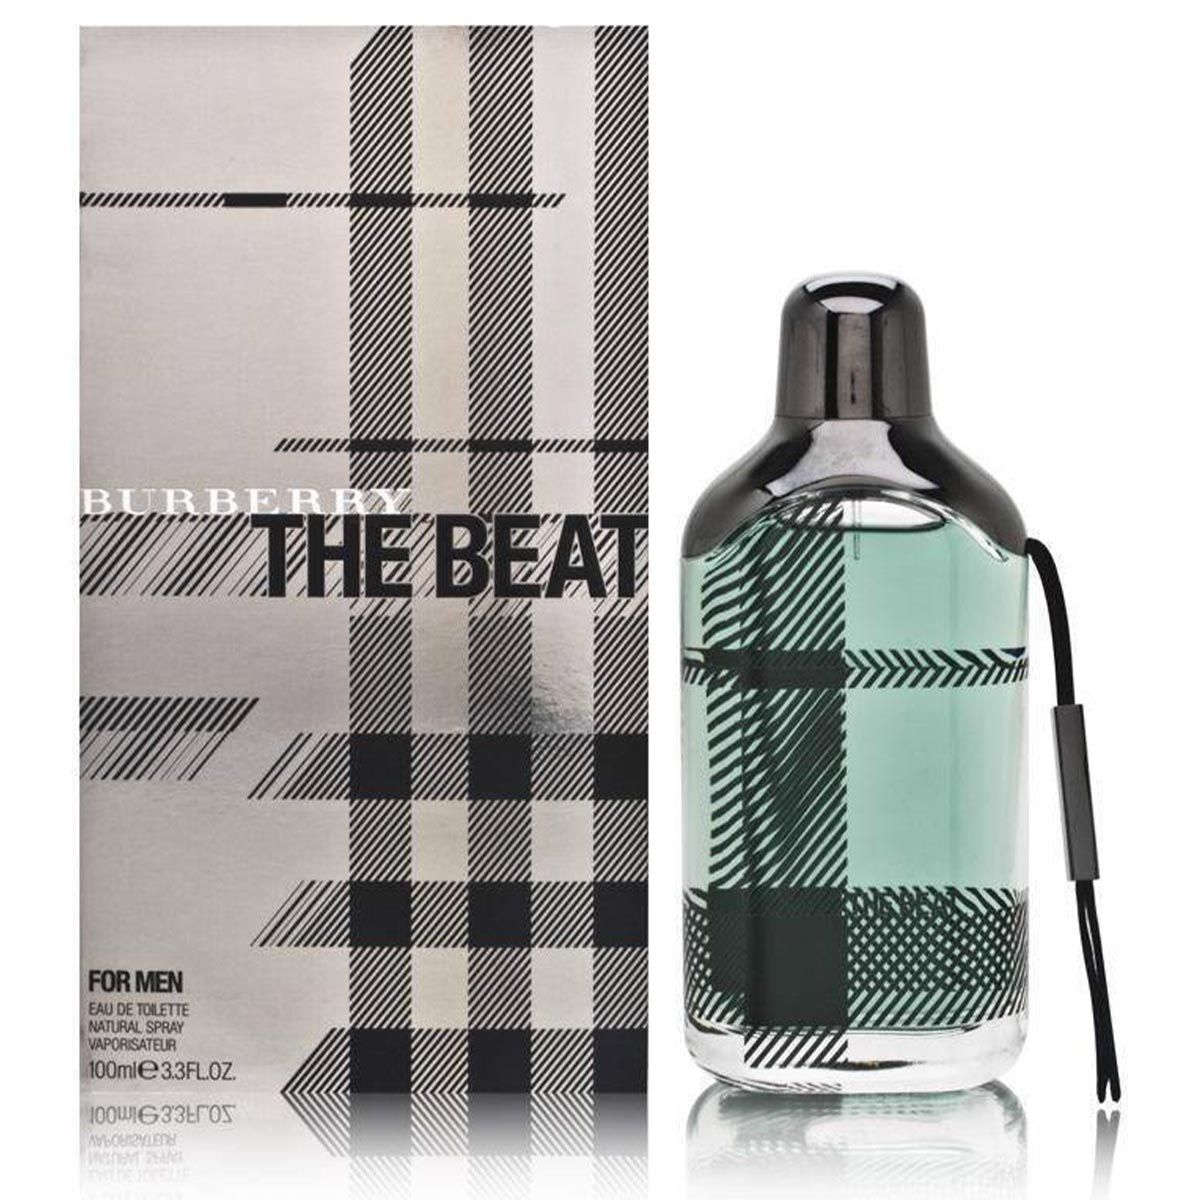 Total 83+ imagen burberry the beat perfume - Abzlocal.mx